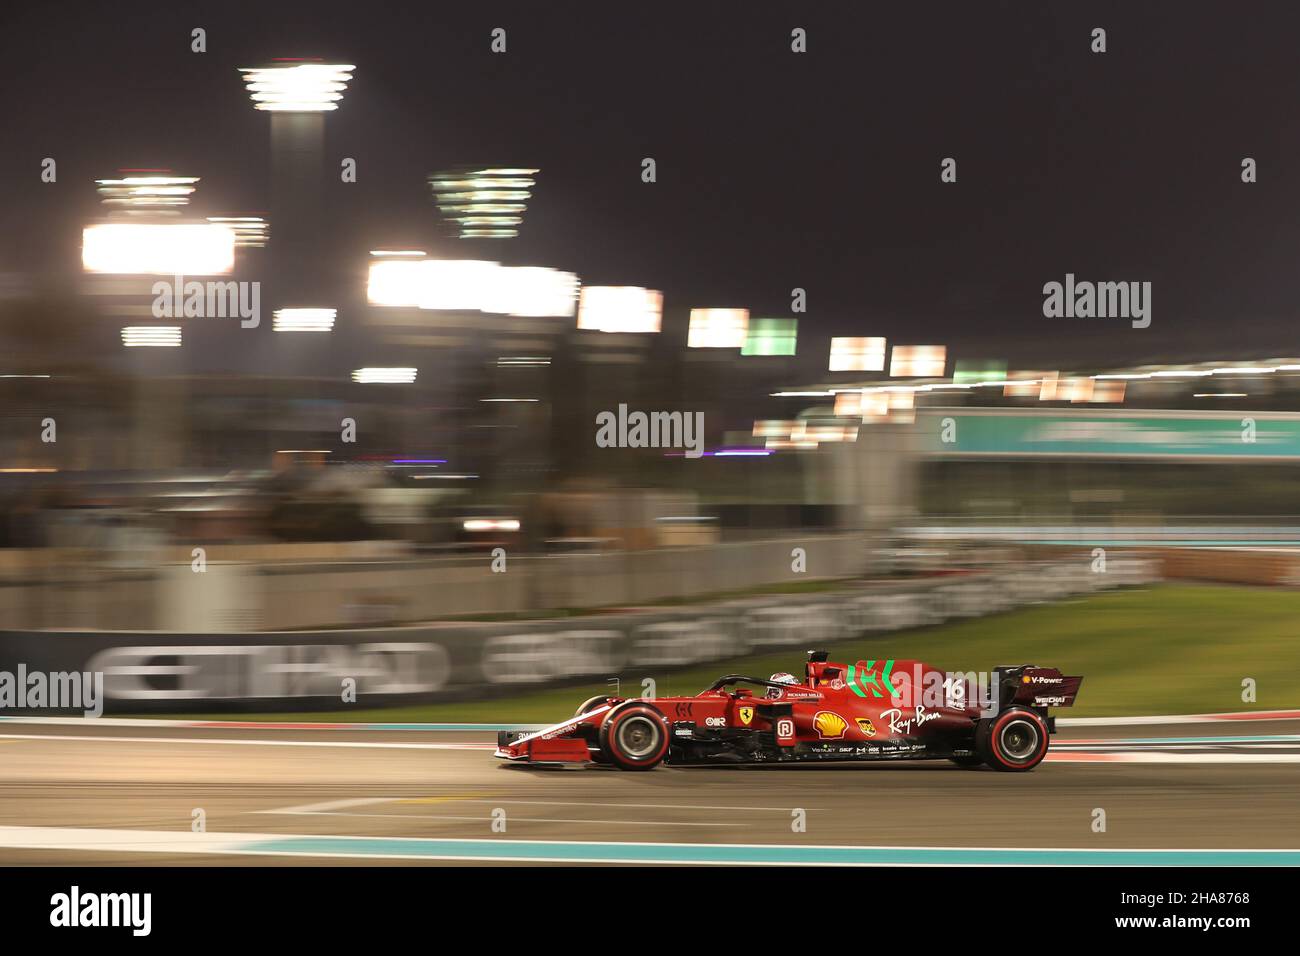 11th. Dezember 2021; Yas Marina Circuit, Abu Dhabi, Vereinigte Arabische Emirate: FIA Abu Dhabi F1 Grand Prix Qualifikationstag: Ferrari Mission winnow, Charles Leclerc Stockfoto